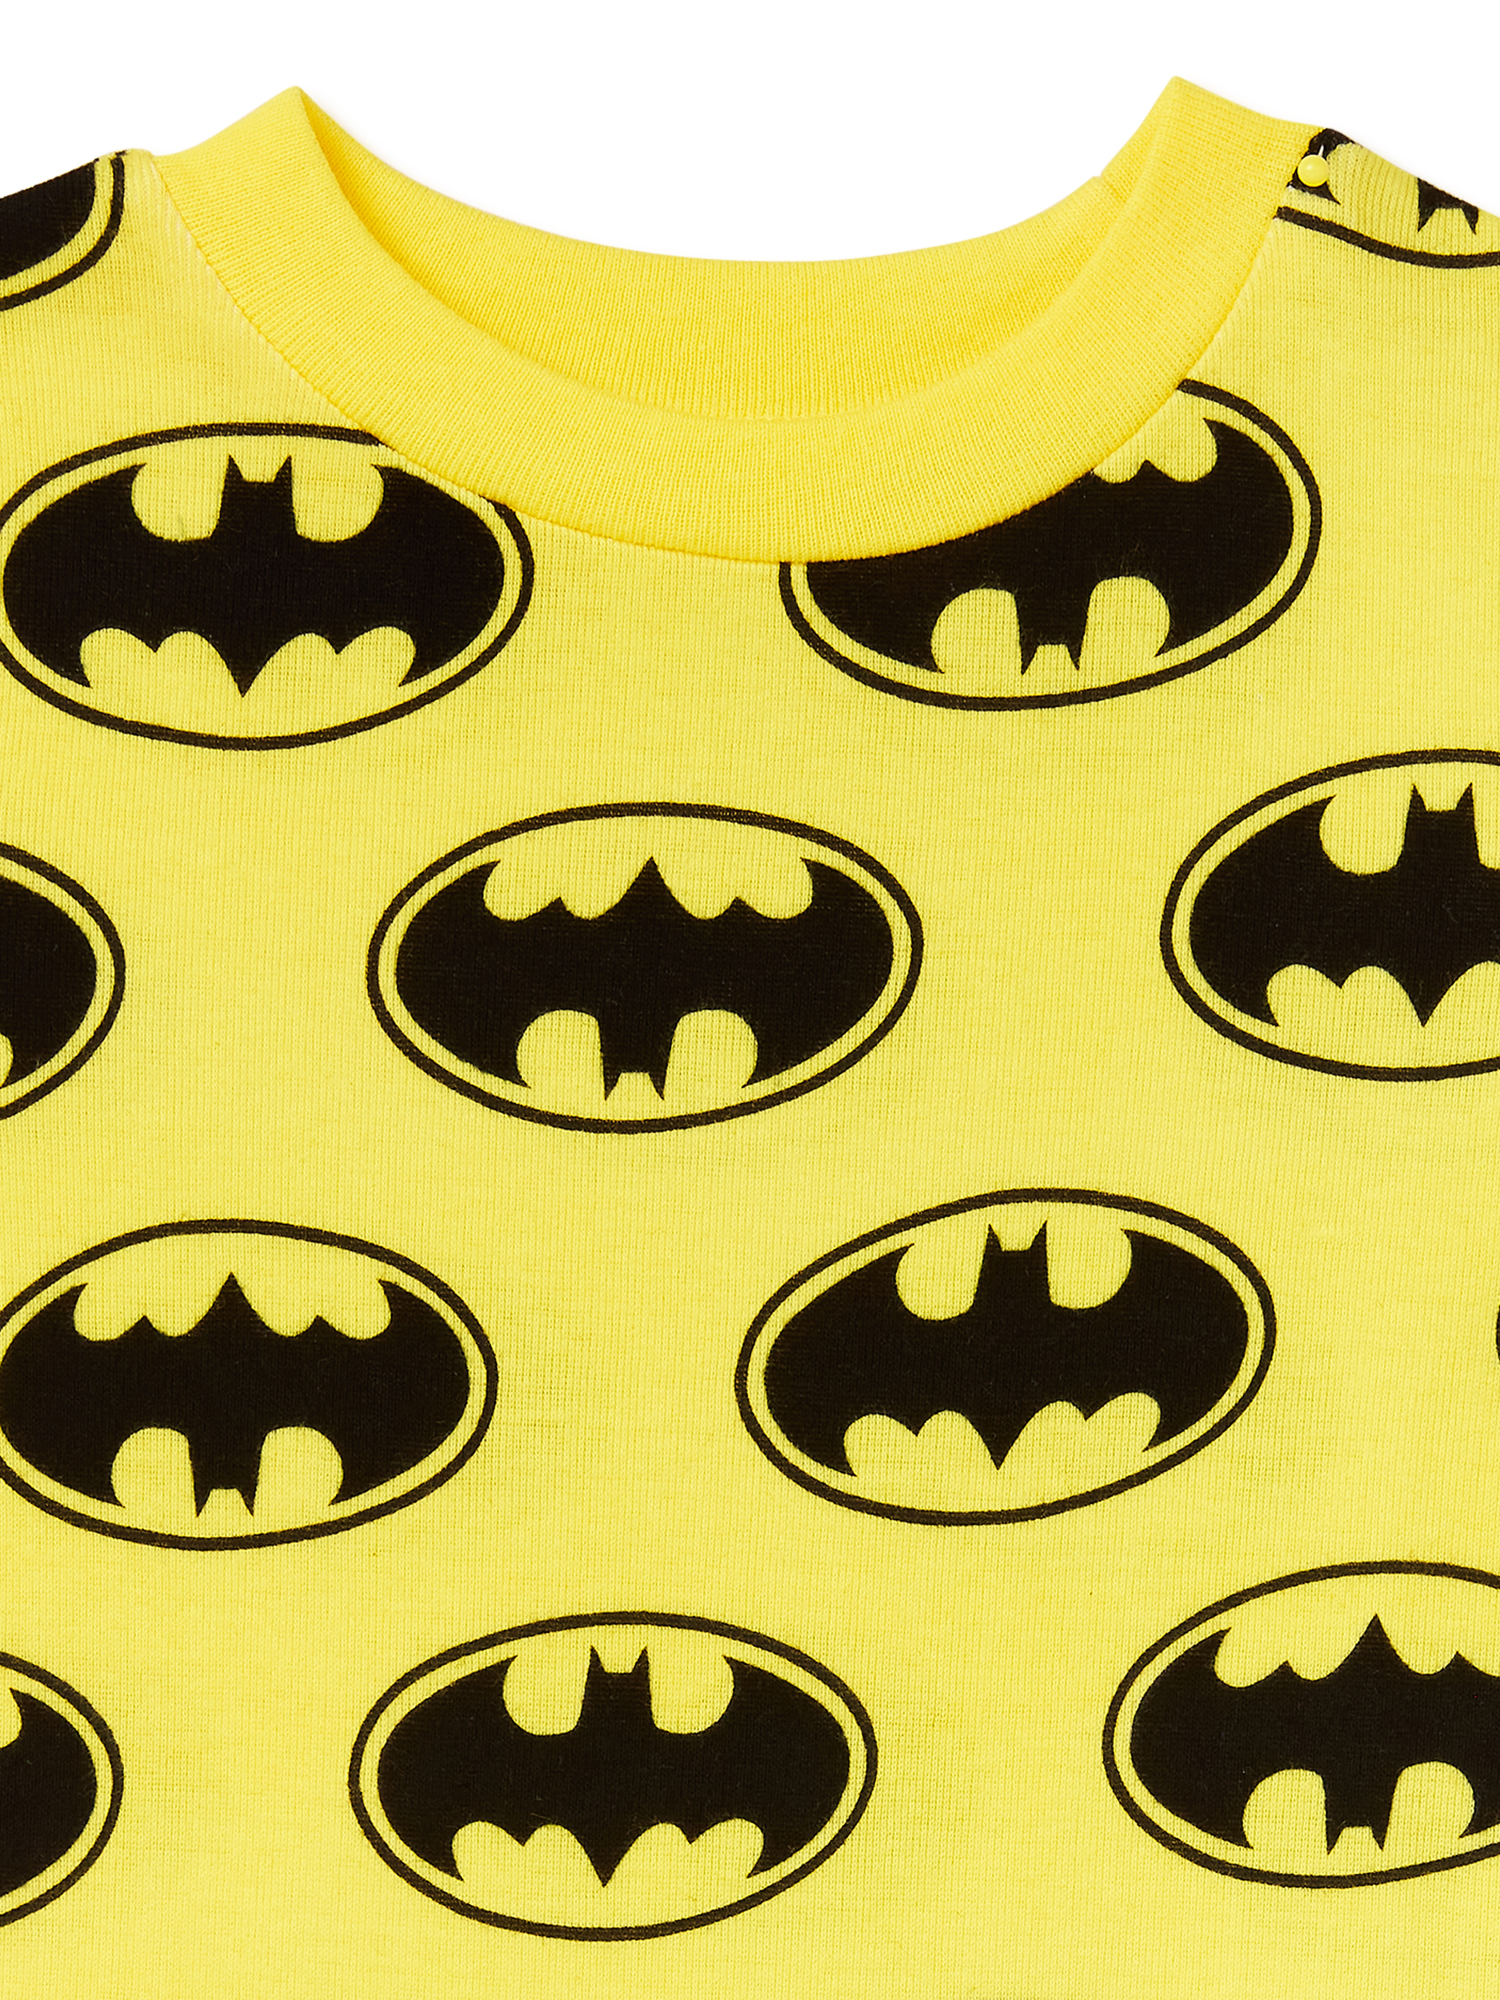 Batman Toddler Boy Cotton T-Shirt, Short, and Pants Pajama Set, 4-Piece, Sizes 12M-4T - image 4 of 4